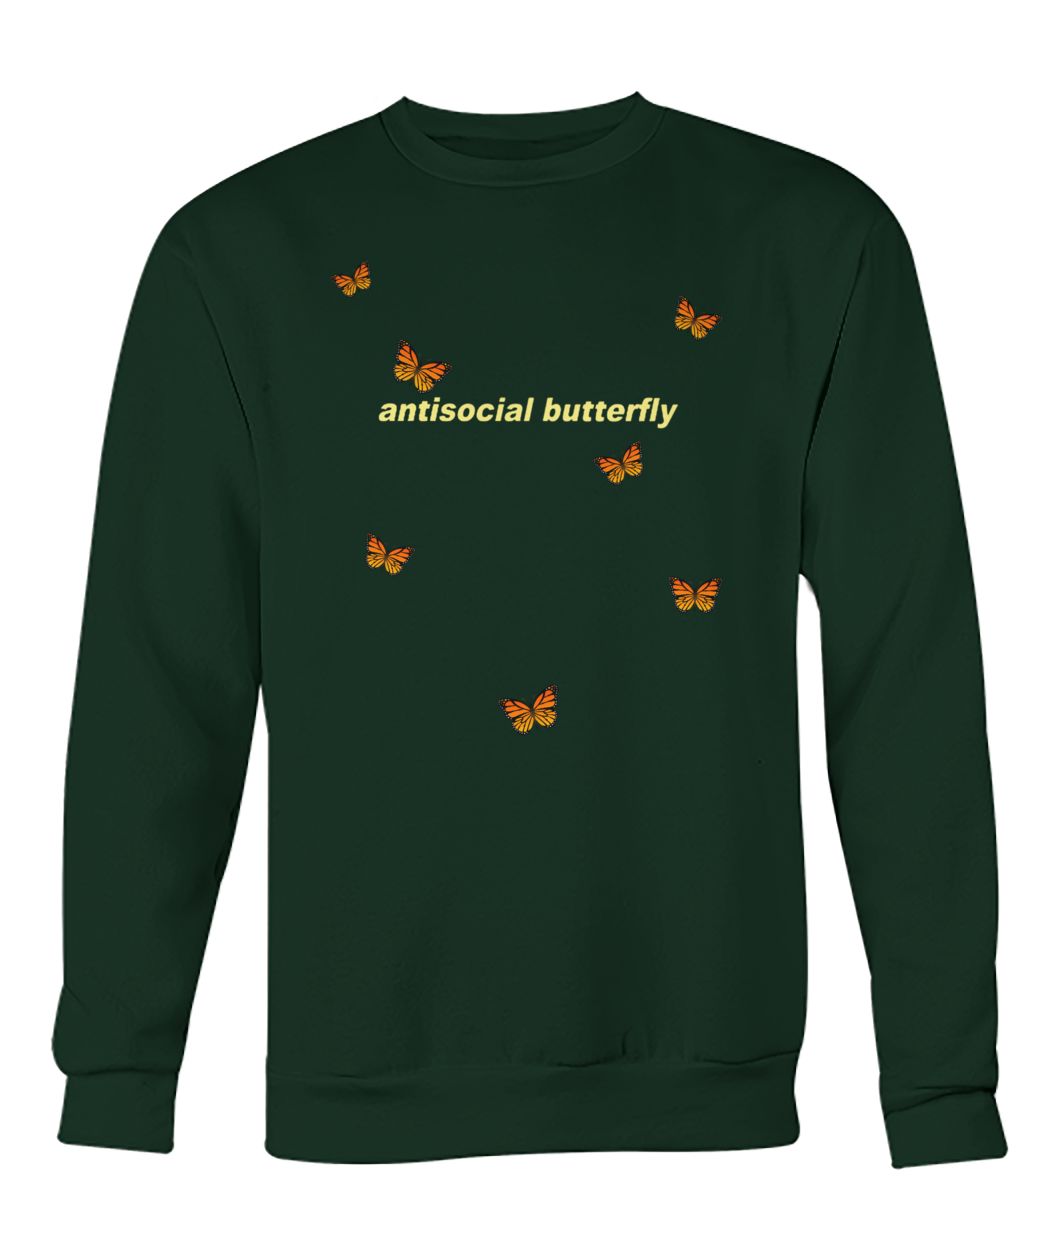 Antisocial butterfly crew neck sweatshirt